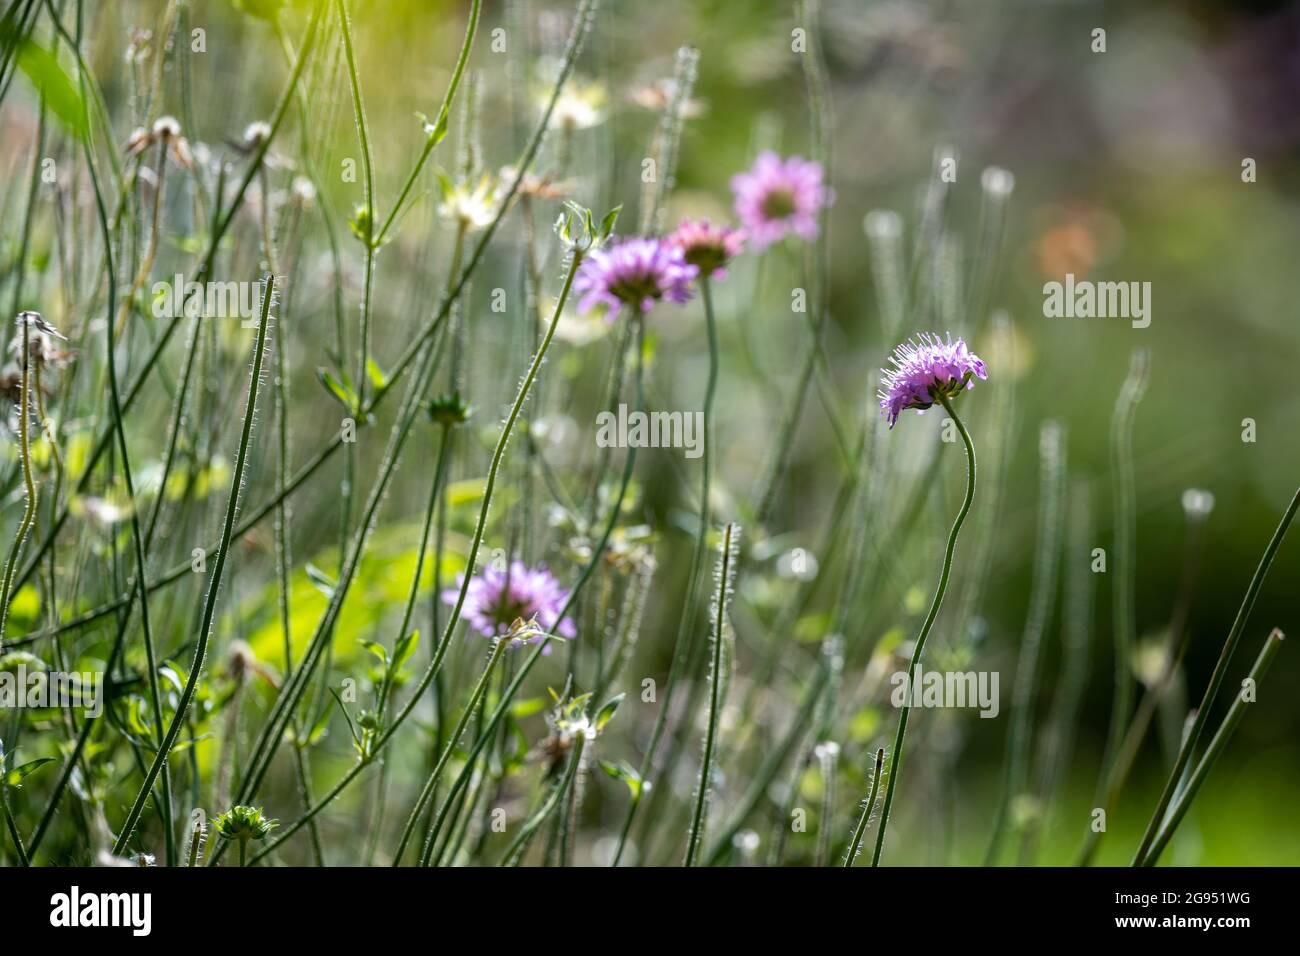 Mauve cottage garden flowers in bright sunshine, attractive to pollinators Stock Photo